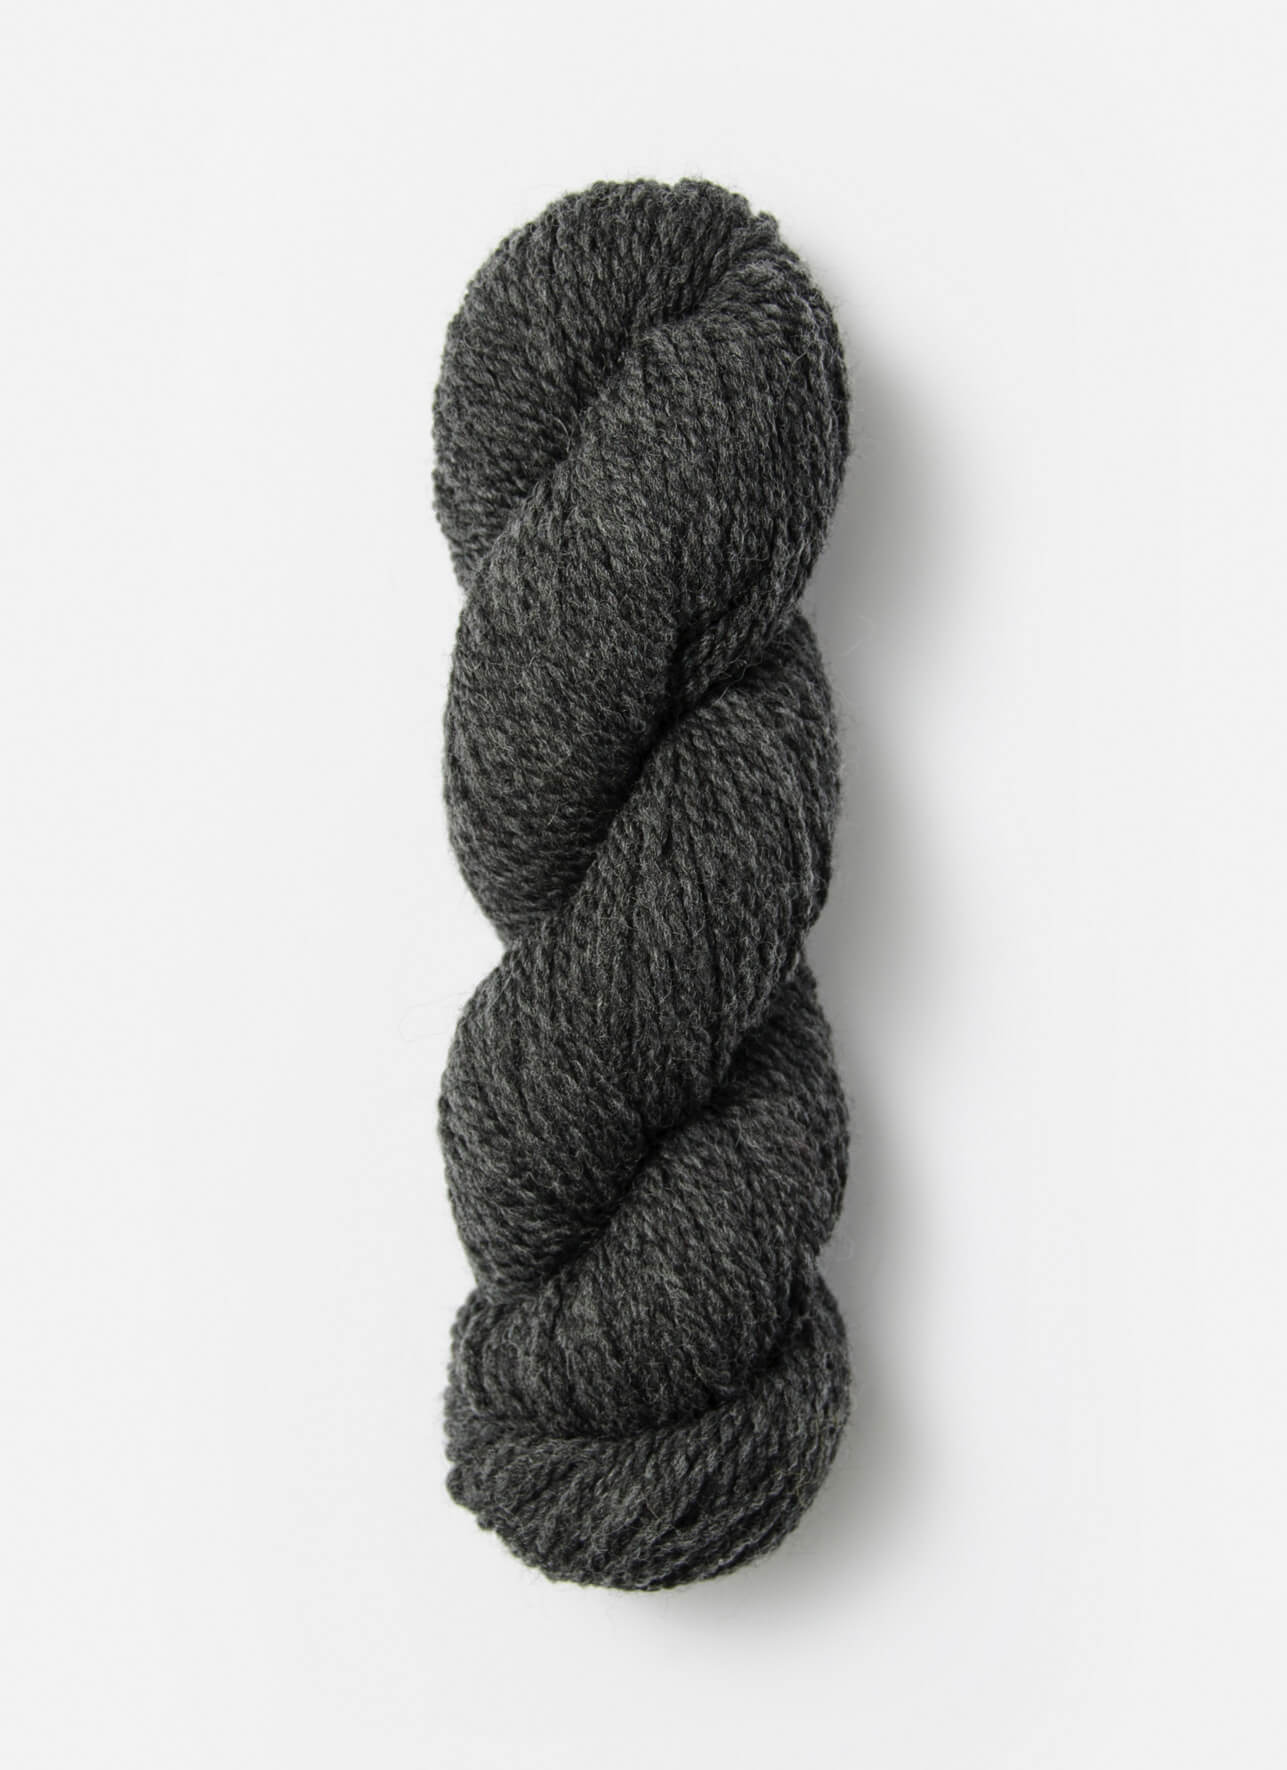 Grey Yarn